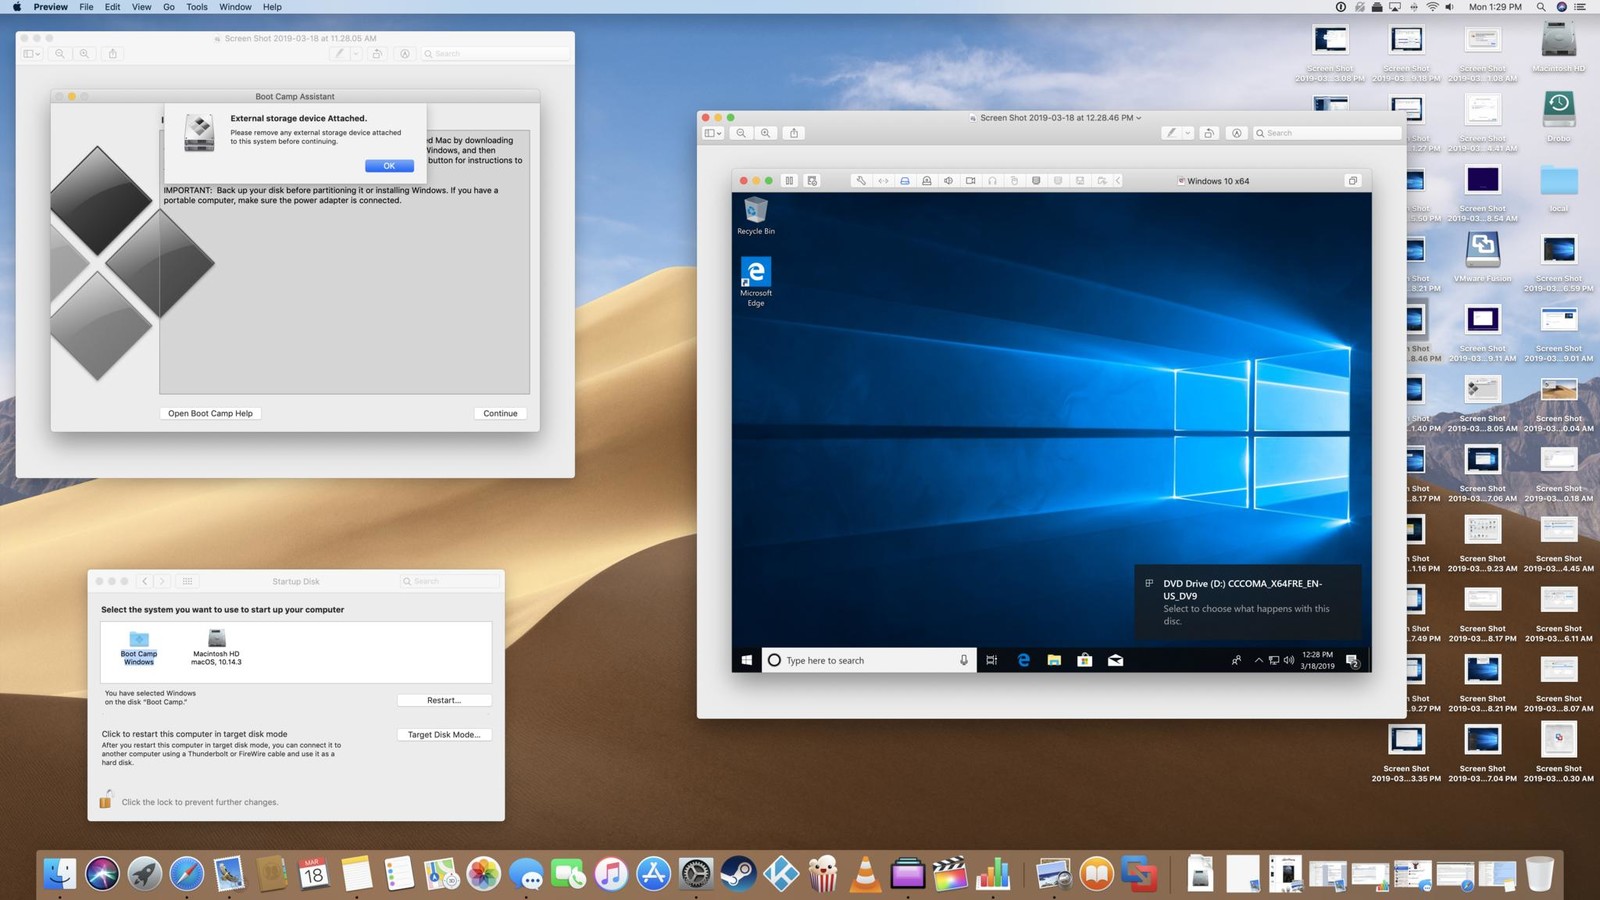 mac os in virtualbox windows 10